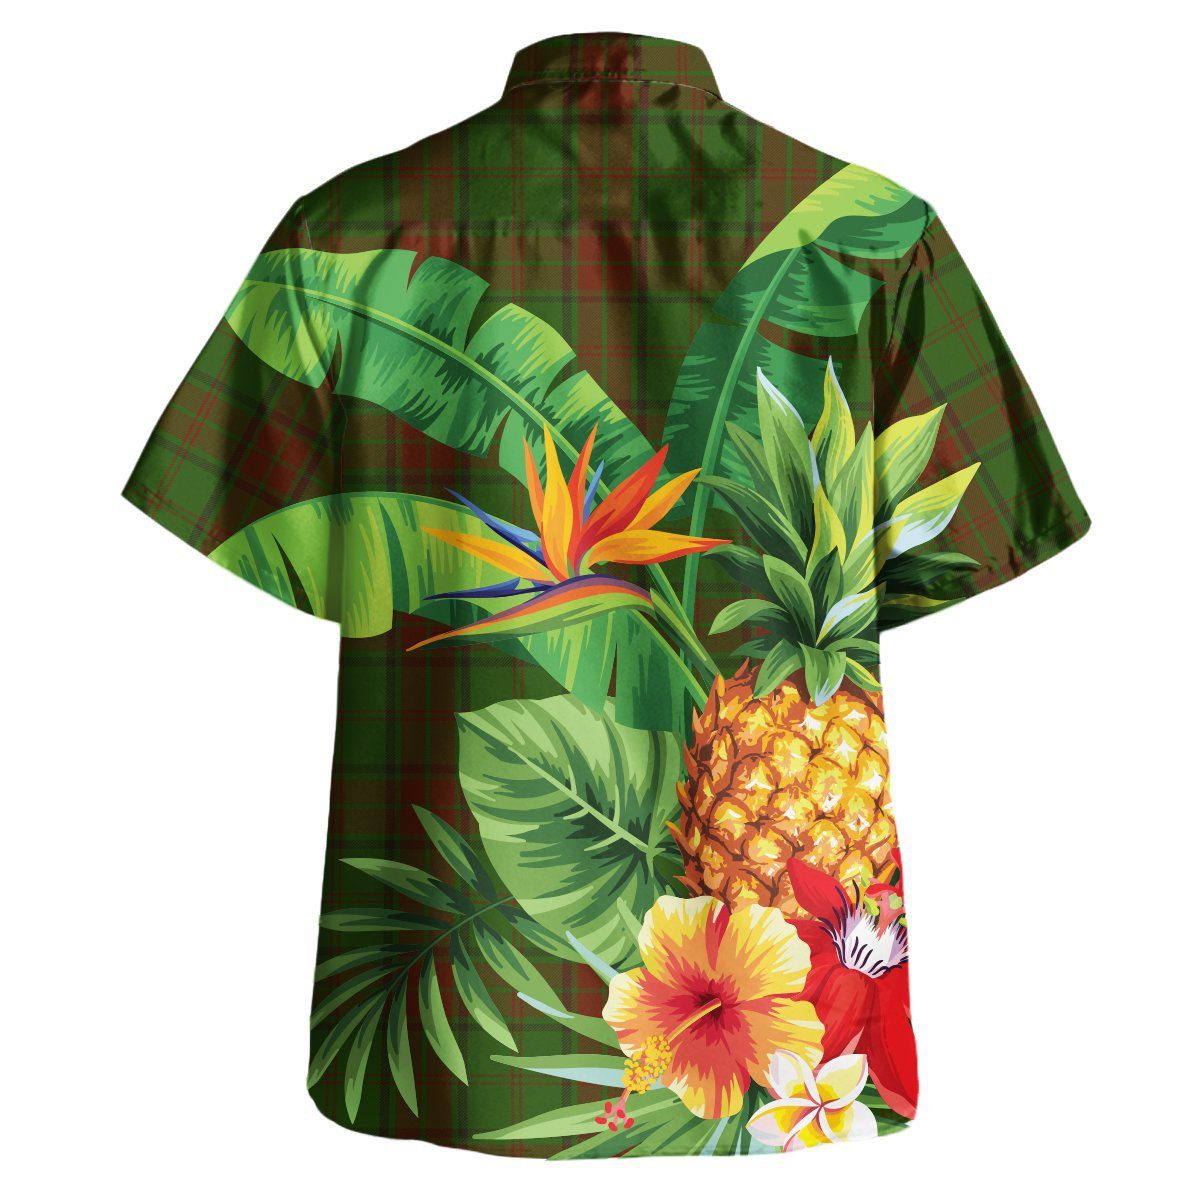 Maxwell Hunting Tartan Aloha Shirt version 2